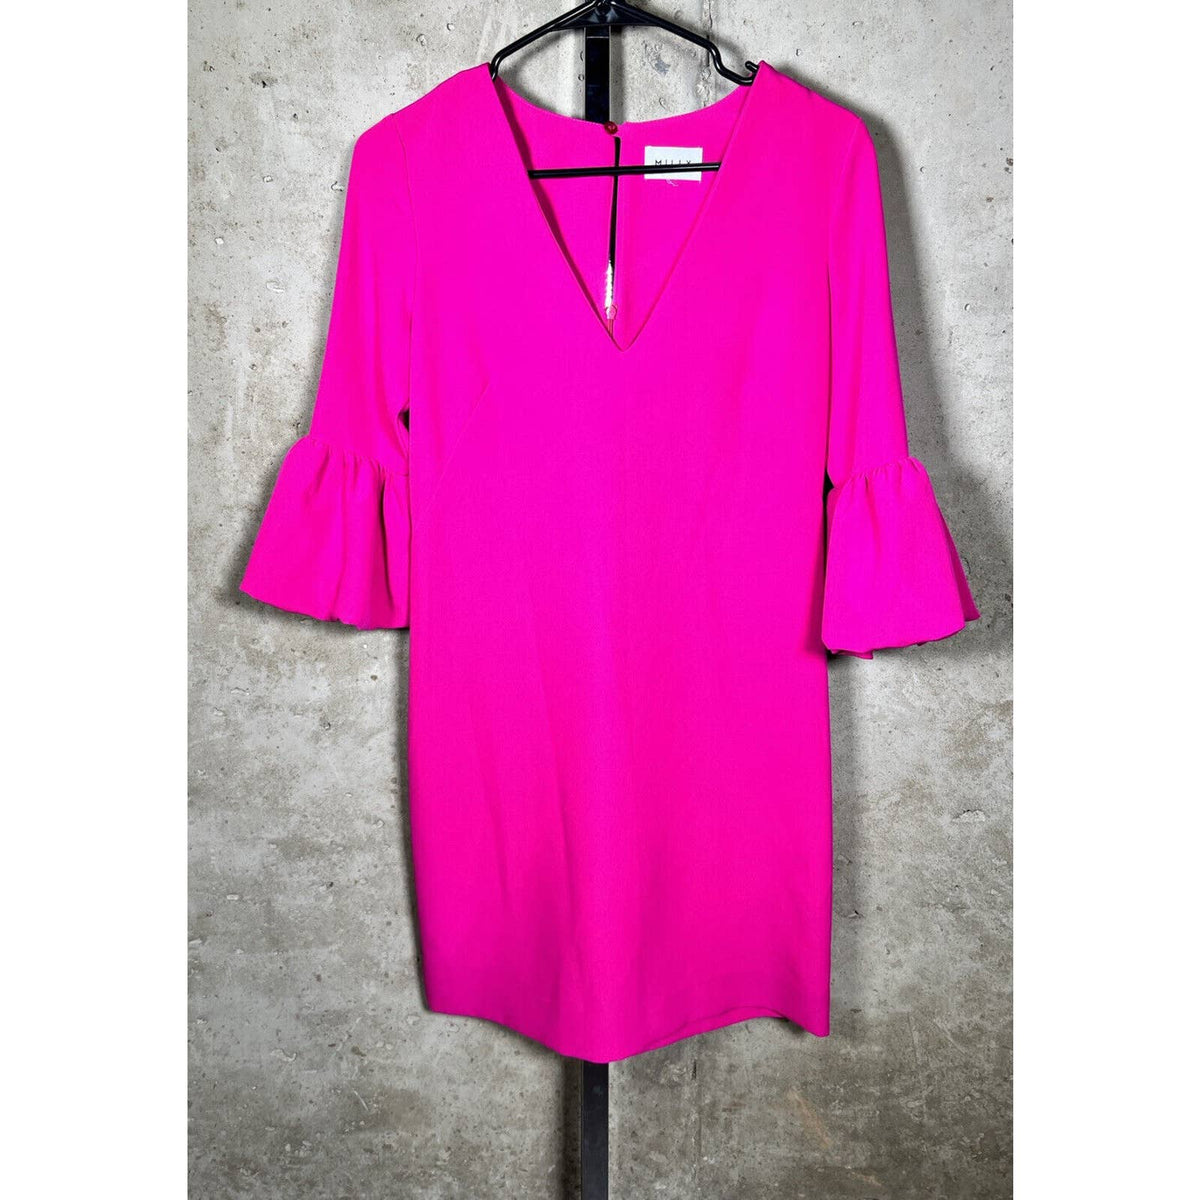 Milly V-Neck Pink Bell Sleeve Dress Sz.Petite